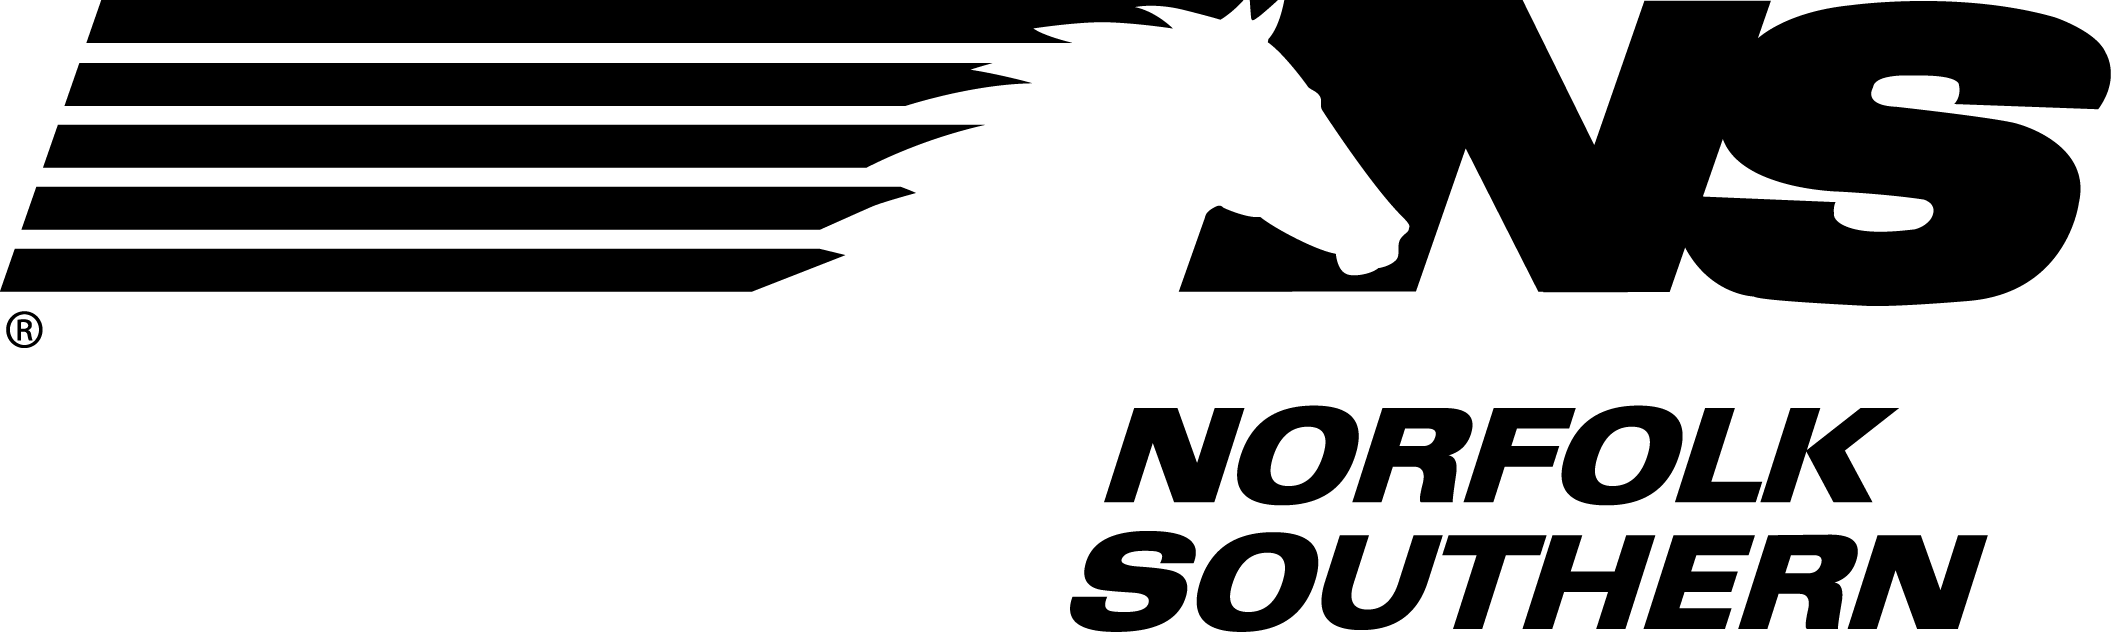 Southern Railway Logo - Norfolk Southern Railway Logo | Railroad | Norfolk southern ...